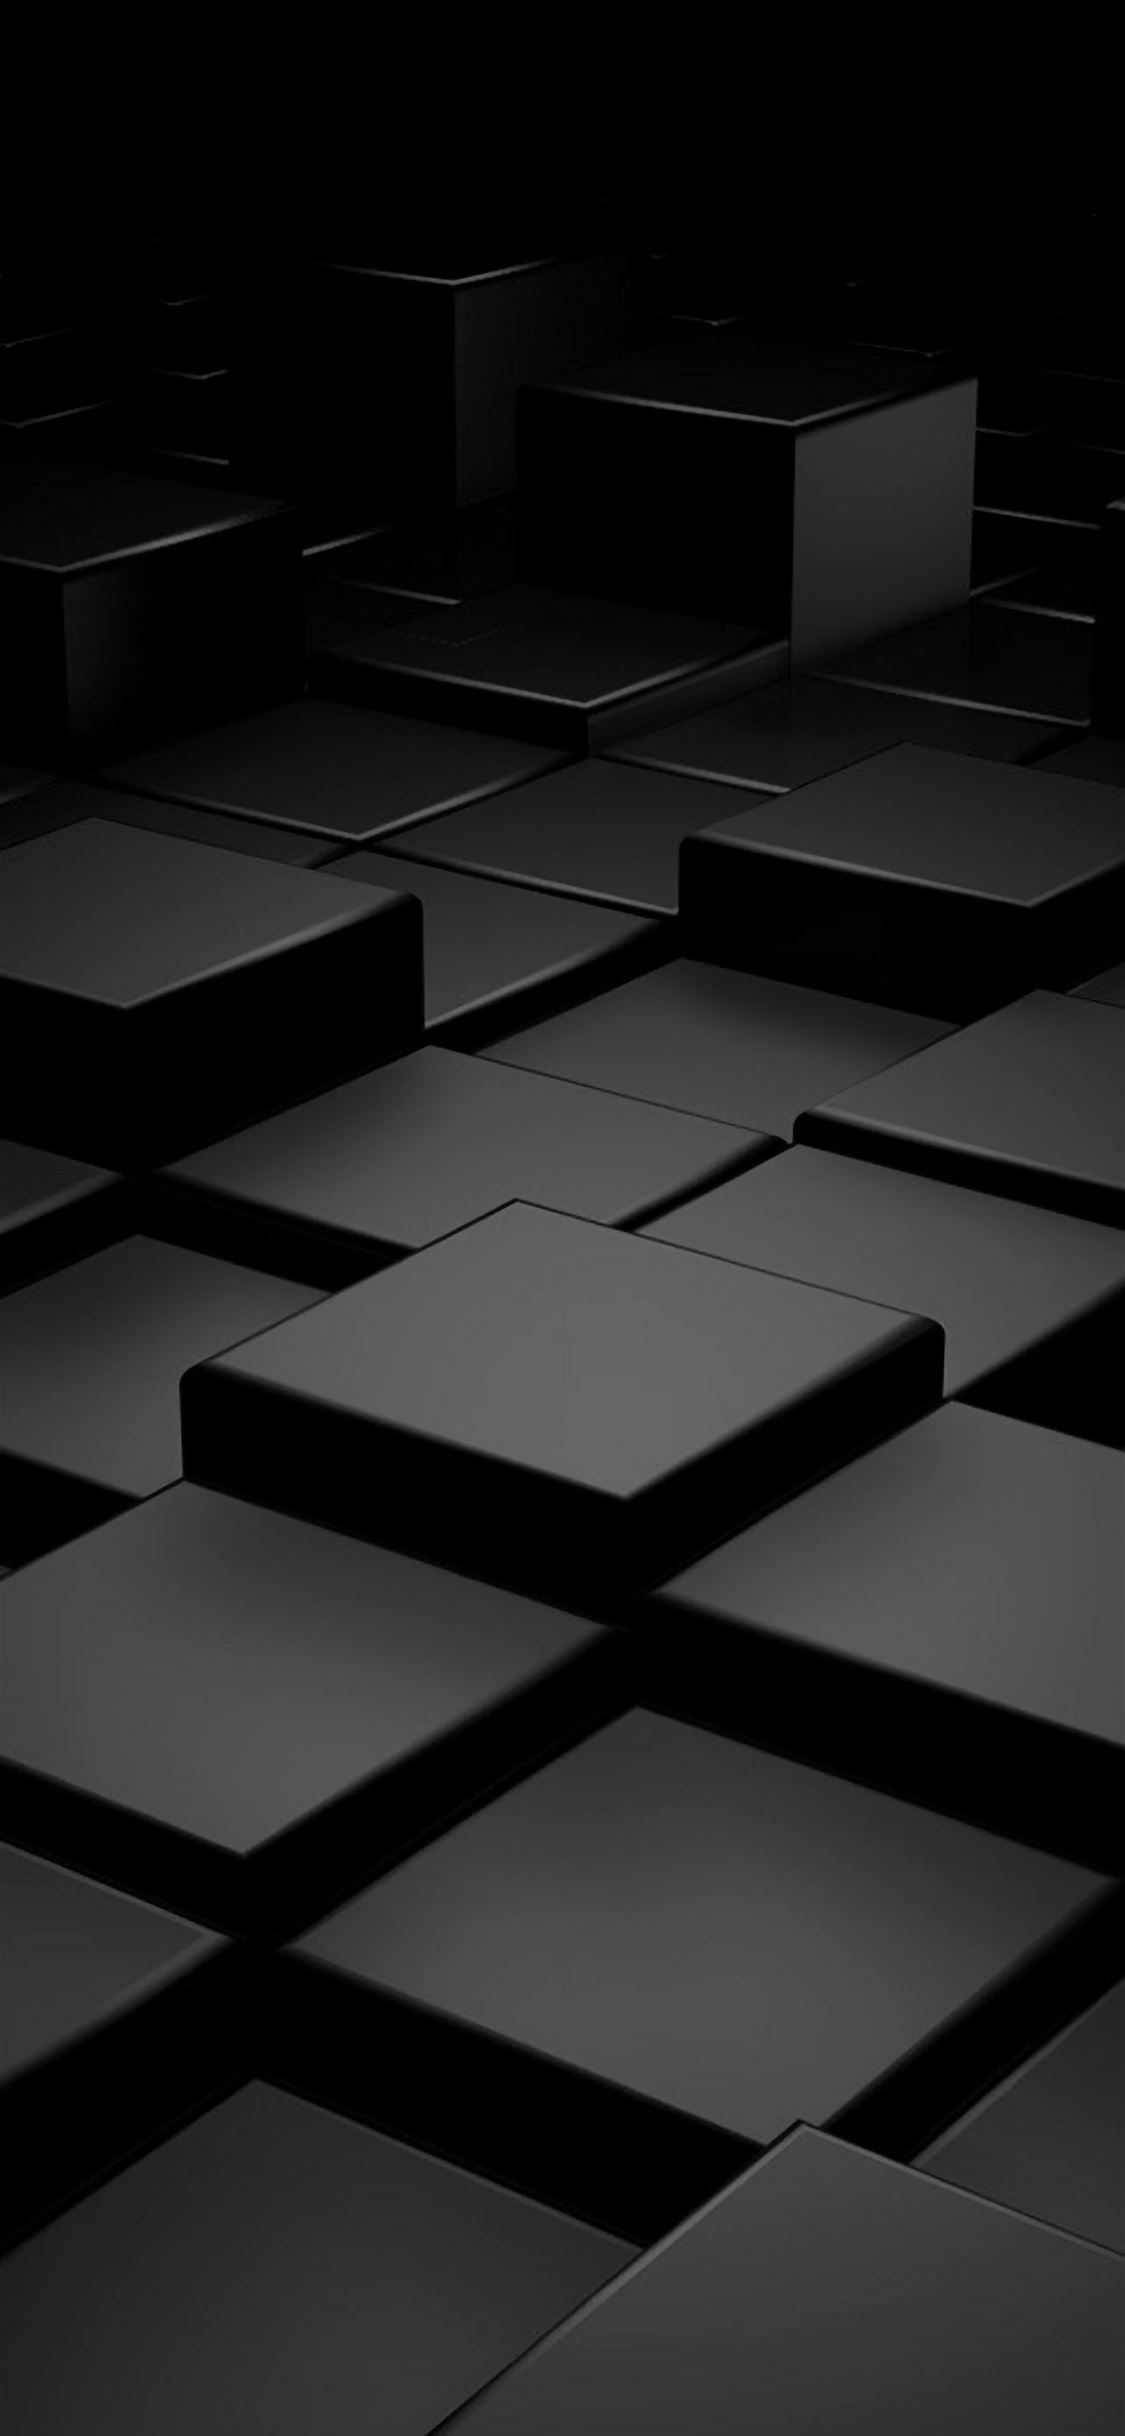 Black 3D Blocks iPhone wallpaper 